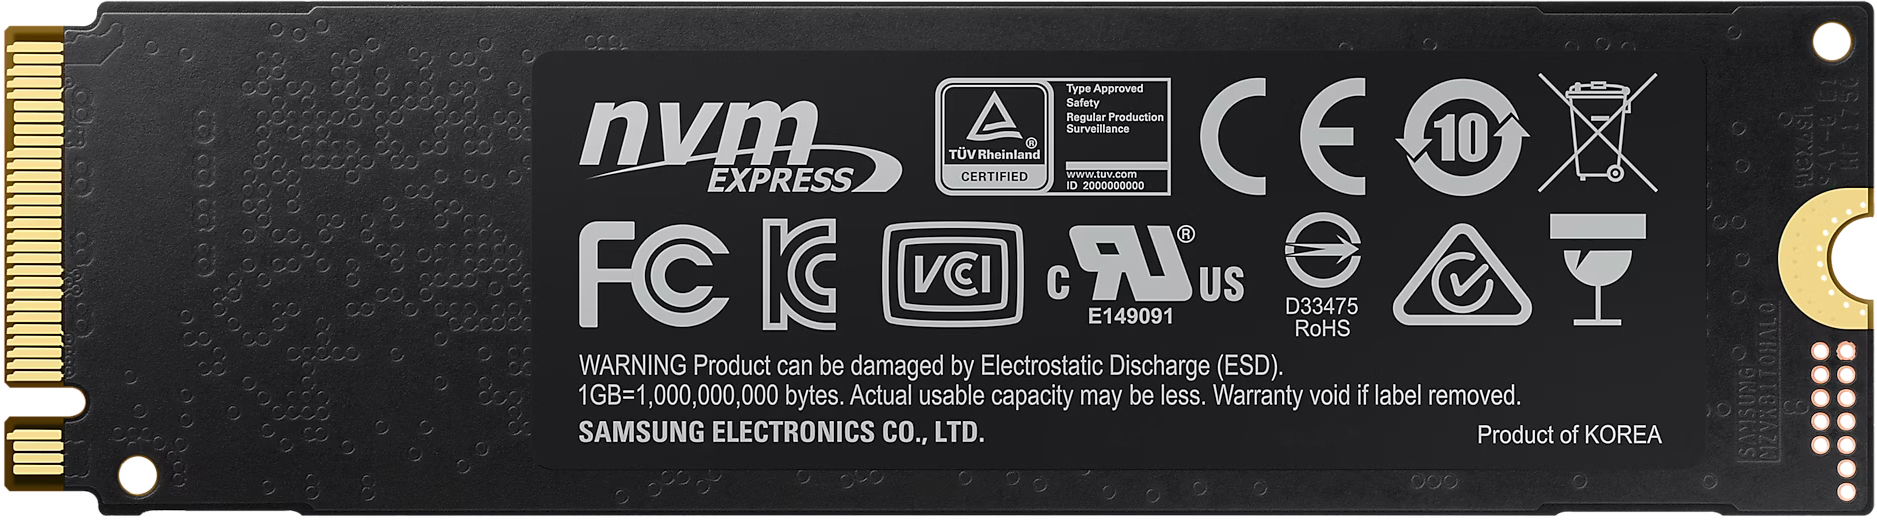 SSD диск Samsung 970 Evo Plus 250GB M.2 PCIe 3.0 x4 V-NAND MLC  (MZ-V7S250BW) – фото, отзывы, характеристики в интернет-магазине ROZETKA